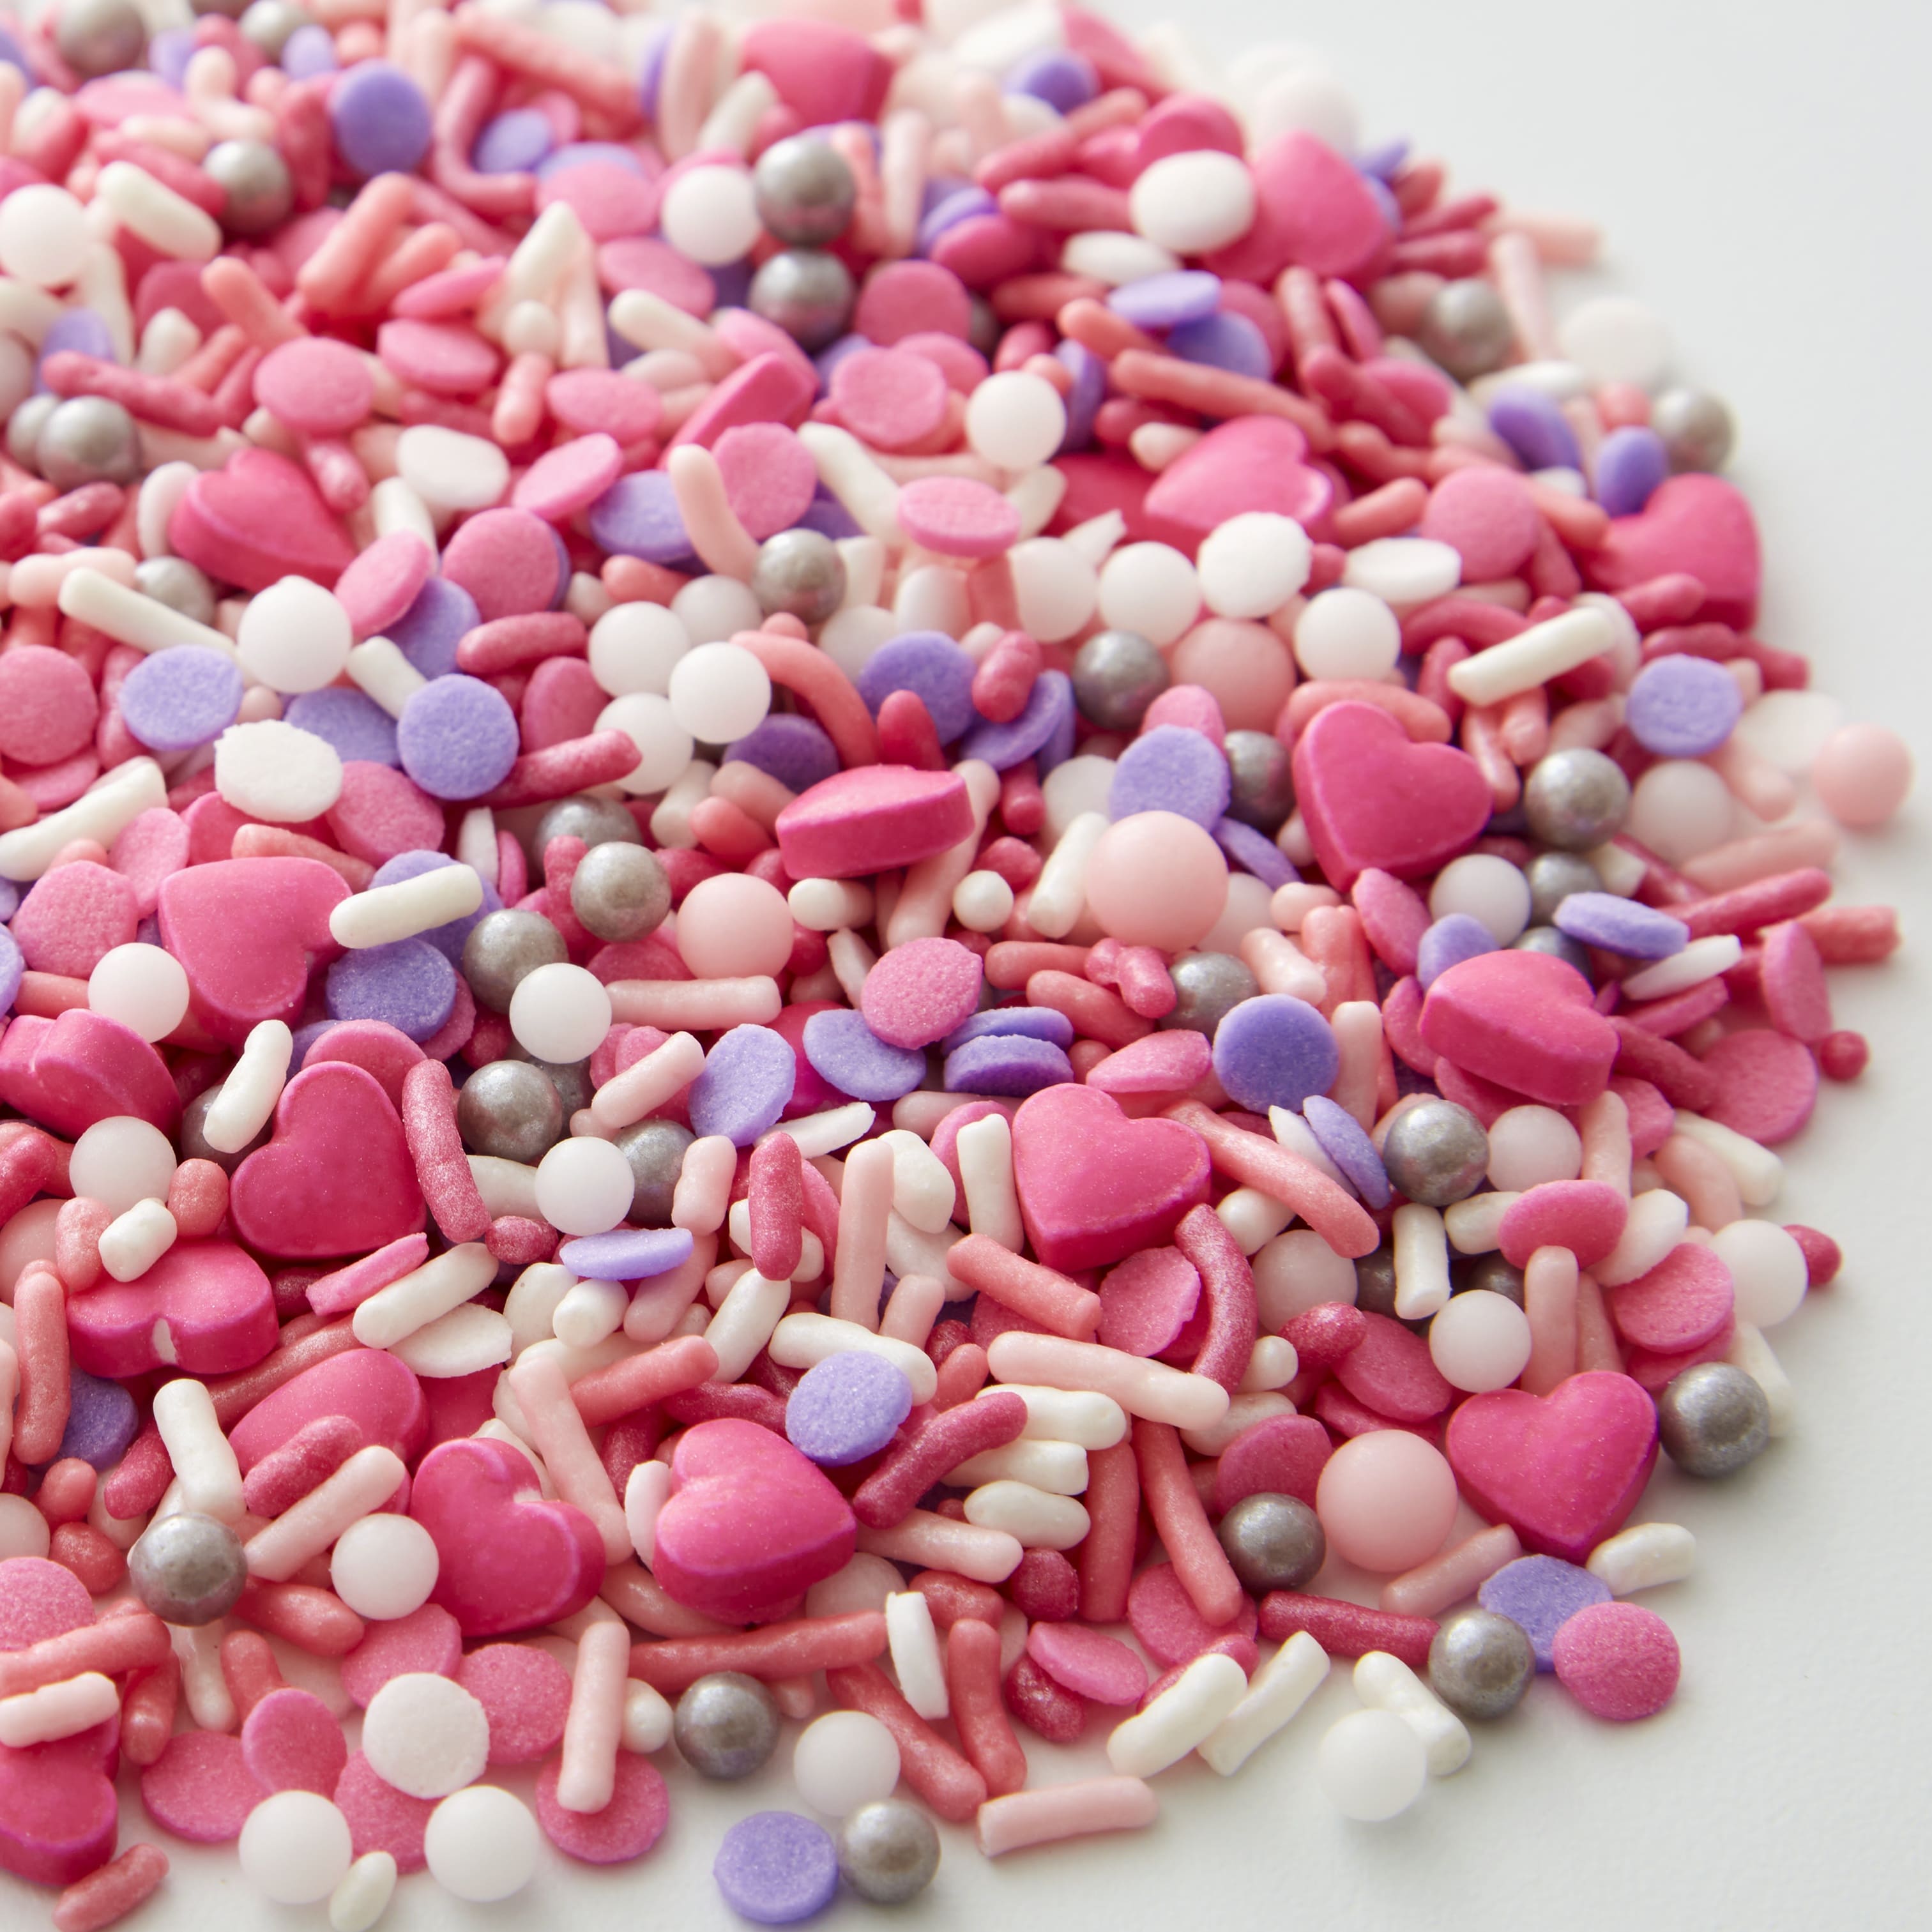 Wilton&#xAE; Pink and Purple Valentine Sprinkles Mix